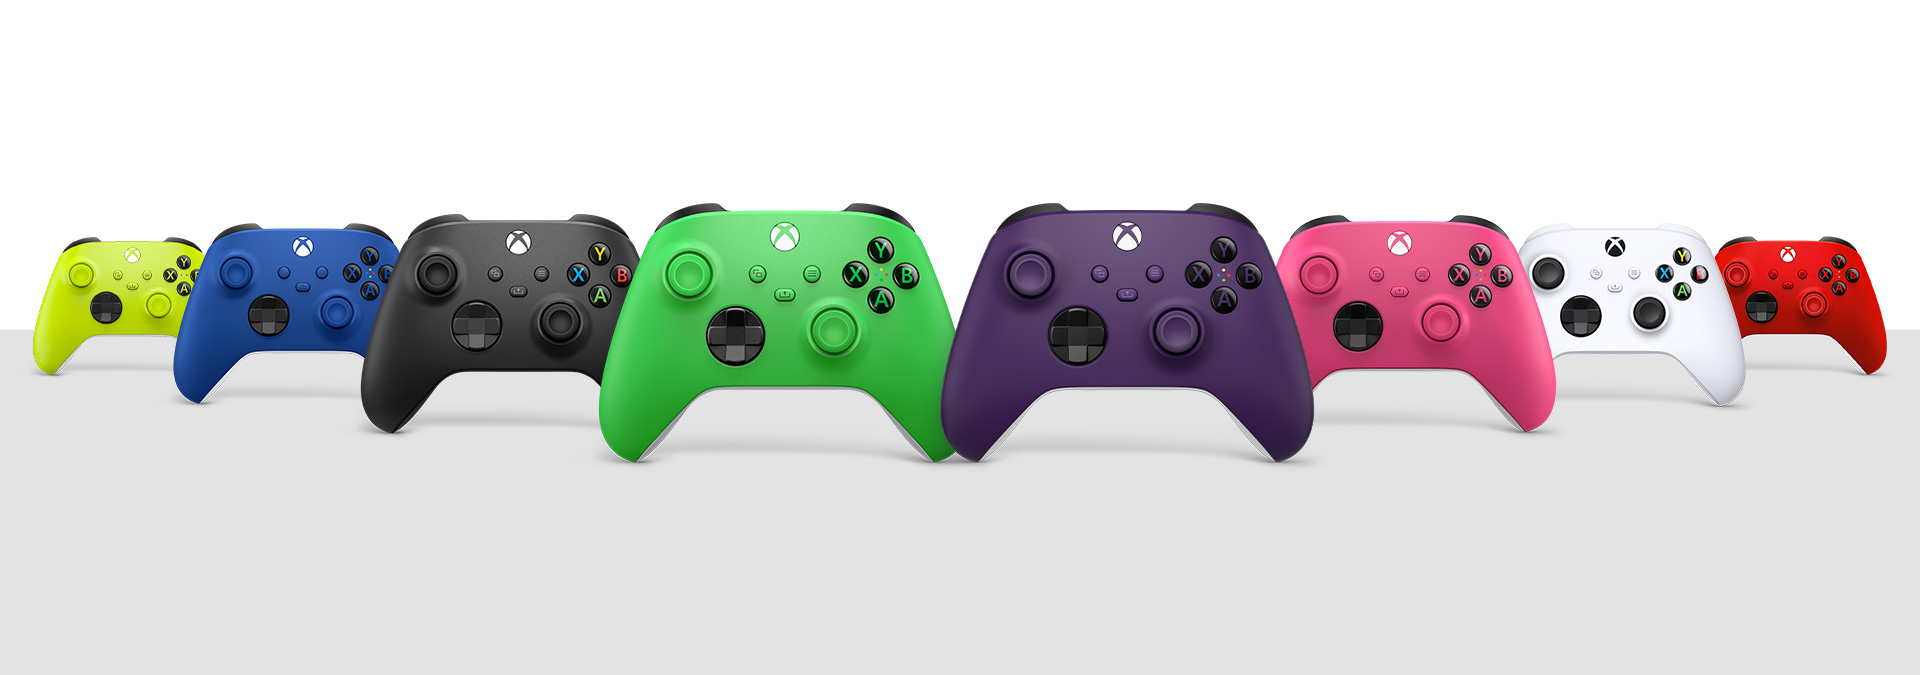 Xbox Kablosuz Oyun Kumandası Carbon Black, Robot White, Shock Blue, Pulse Red, Electric Volt, Deep Pink, Velocity Green ve Astral Purple